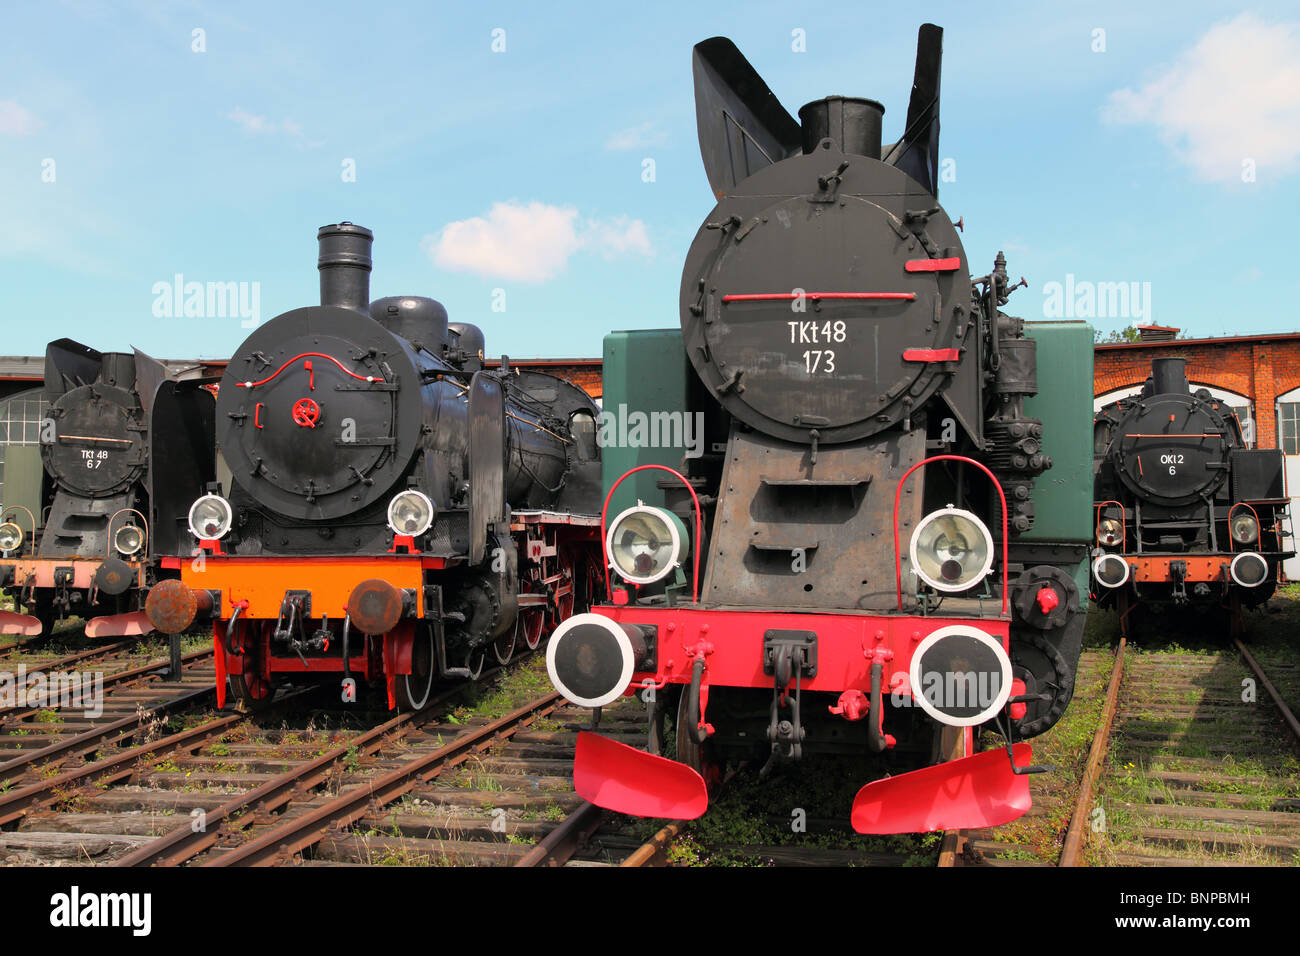 Old steam engine locomotive oldtimer machine Stock Photo